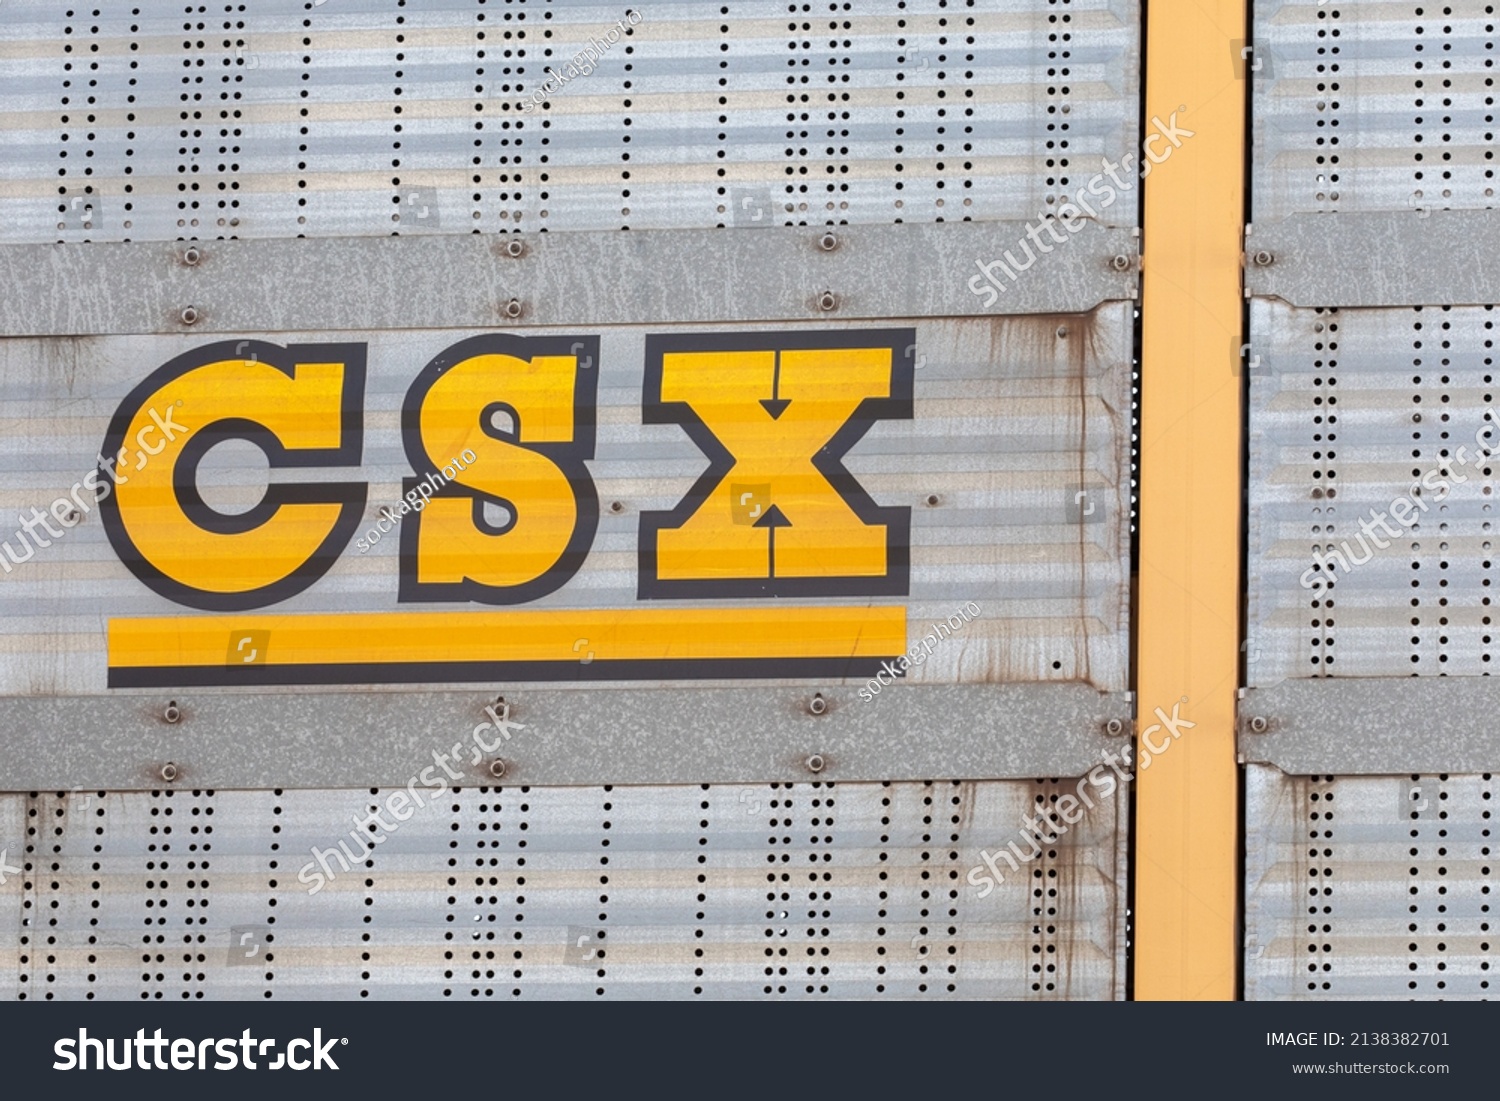 32 Csx logo Images, Stock Photos & Vectors | Shutterstock